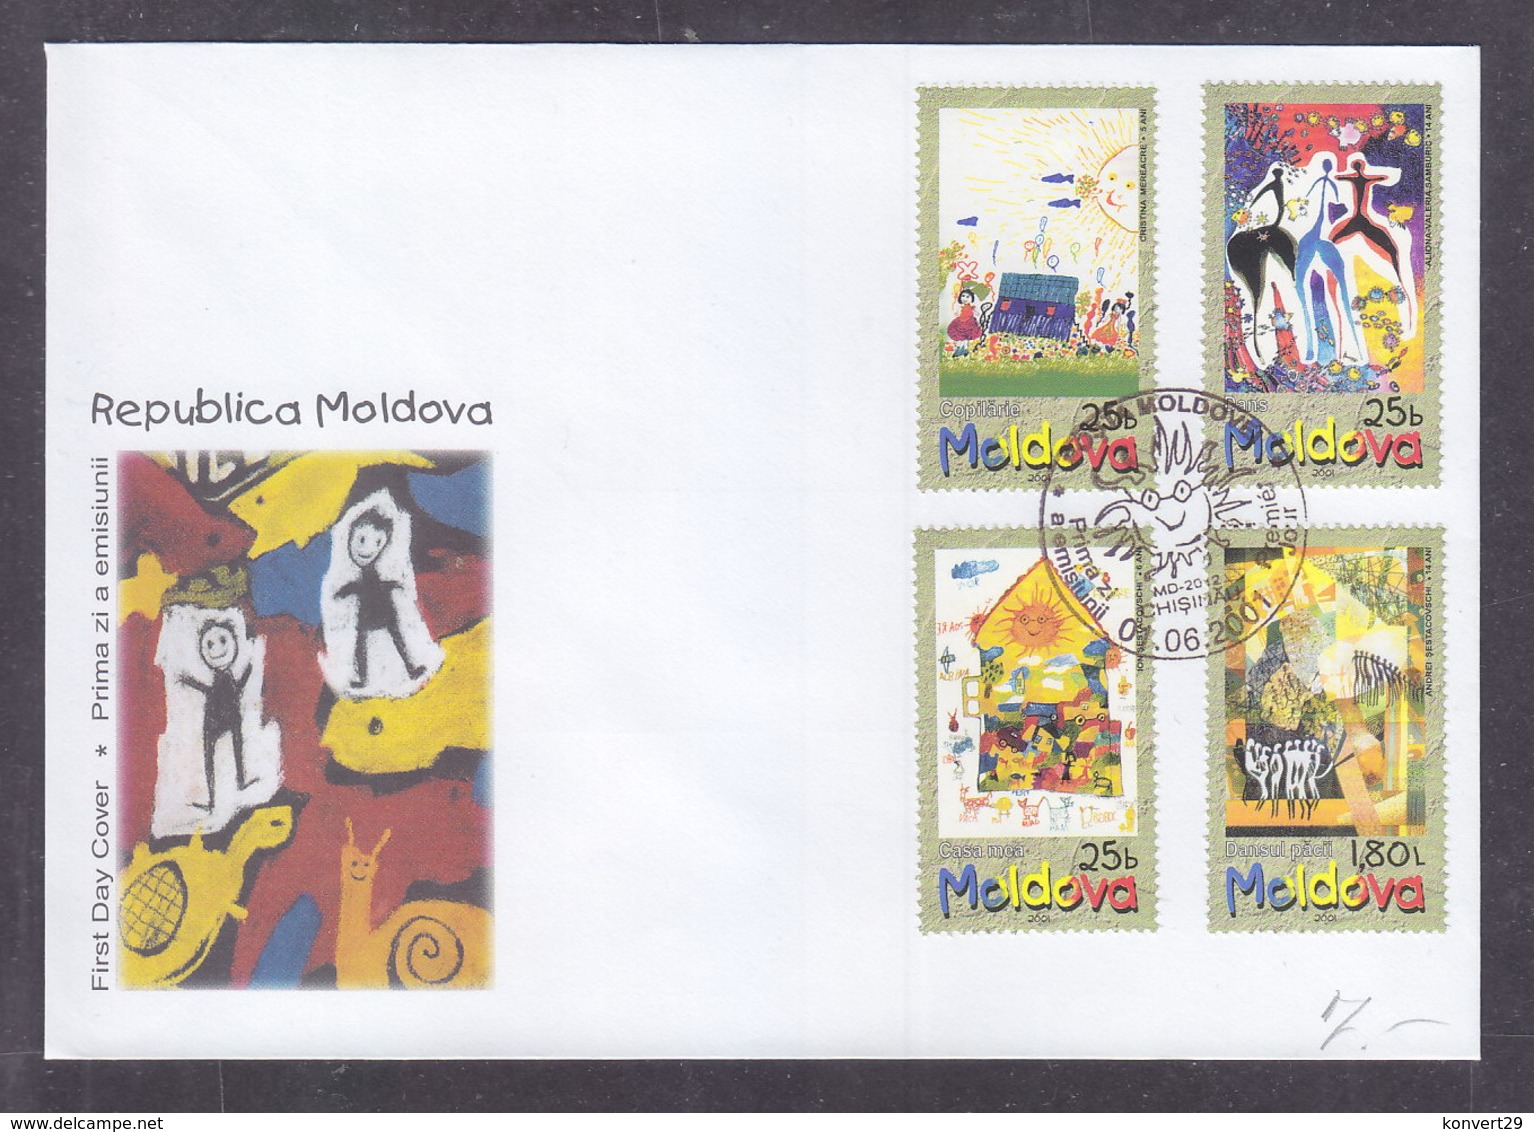 Moldova 2001 International Day Of The Child FDC - Moldova